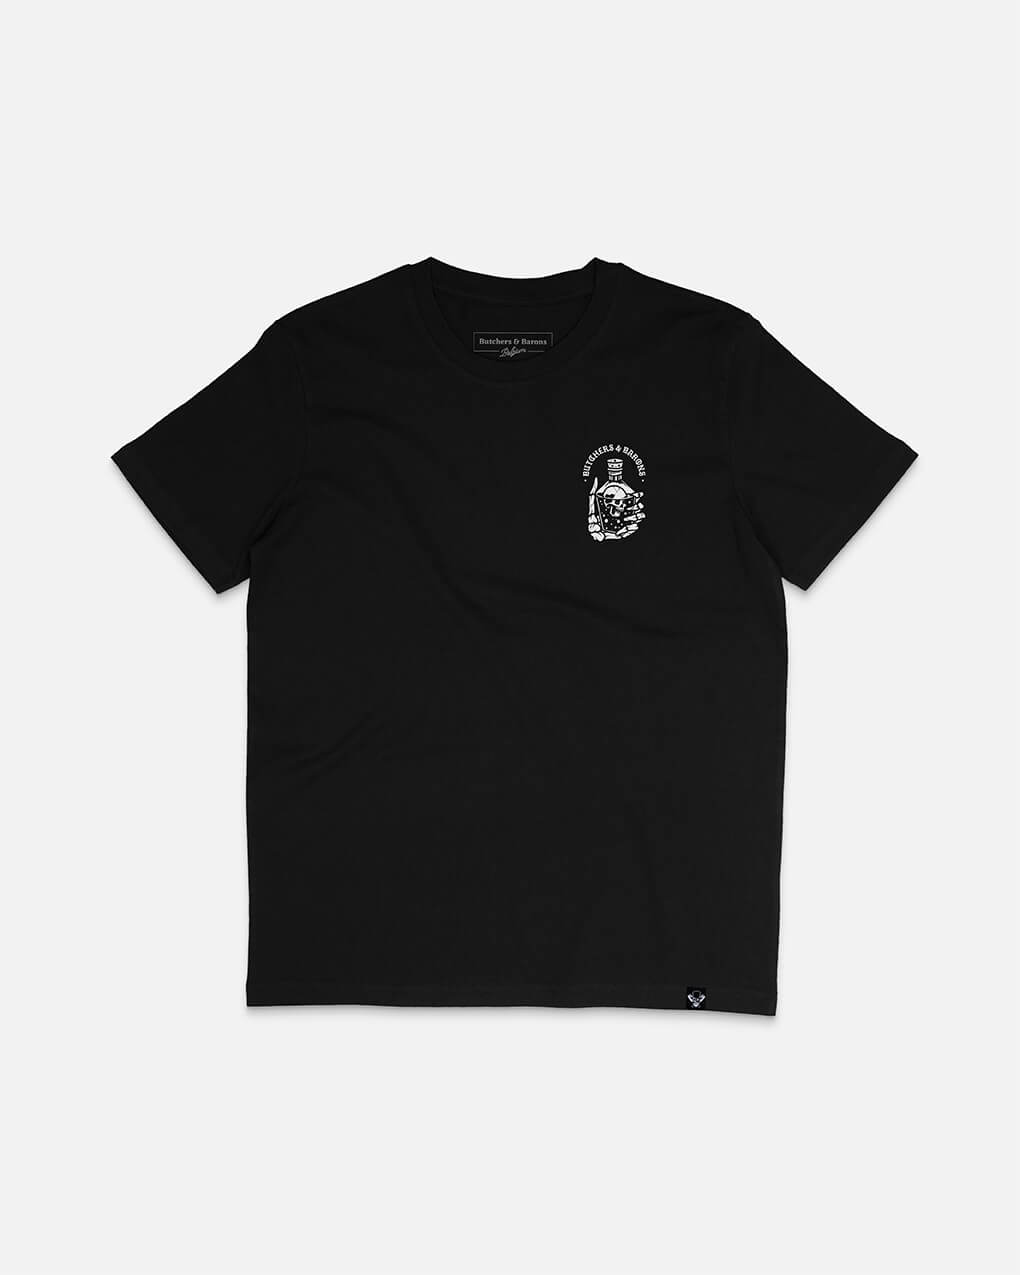 Potion black t-shirt - Butchers & Barons